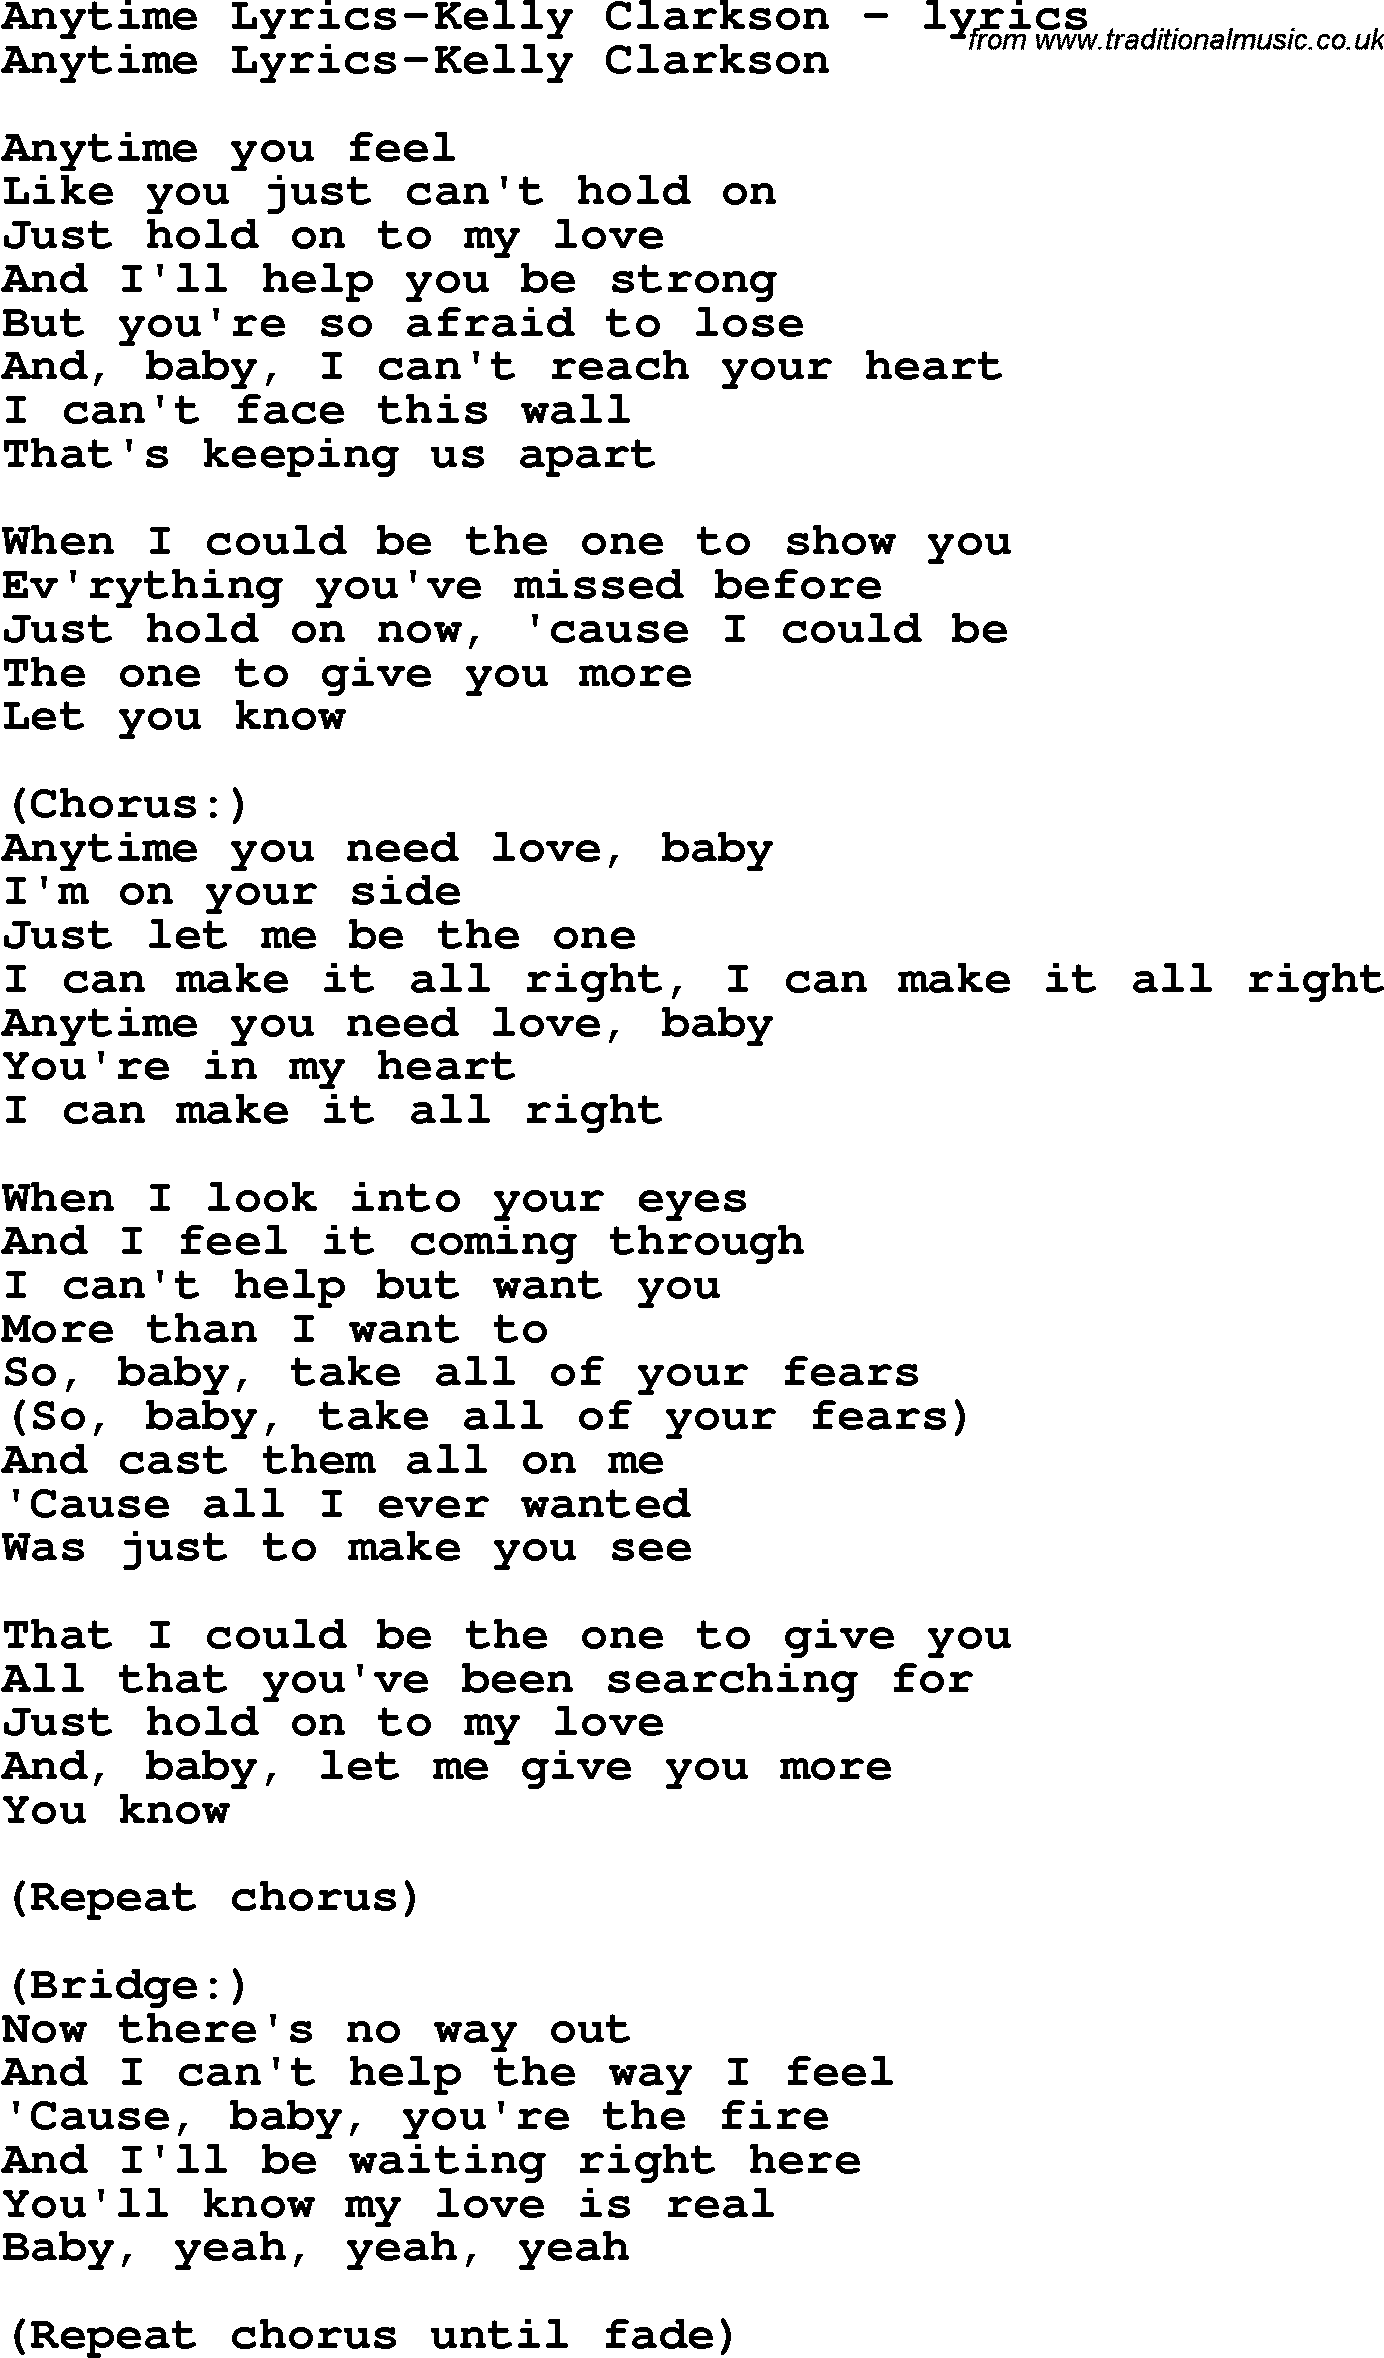 Love Song Lyrics For Anytime Lyrics Kelly Clarkson